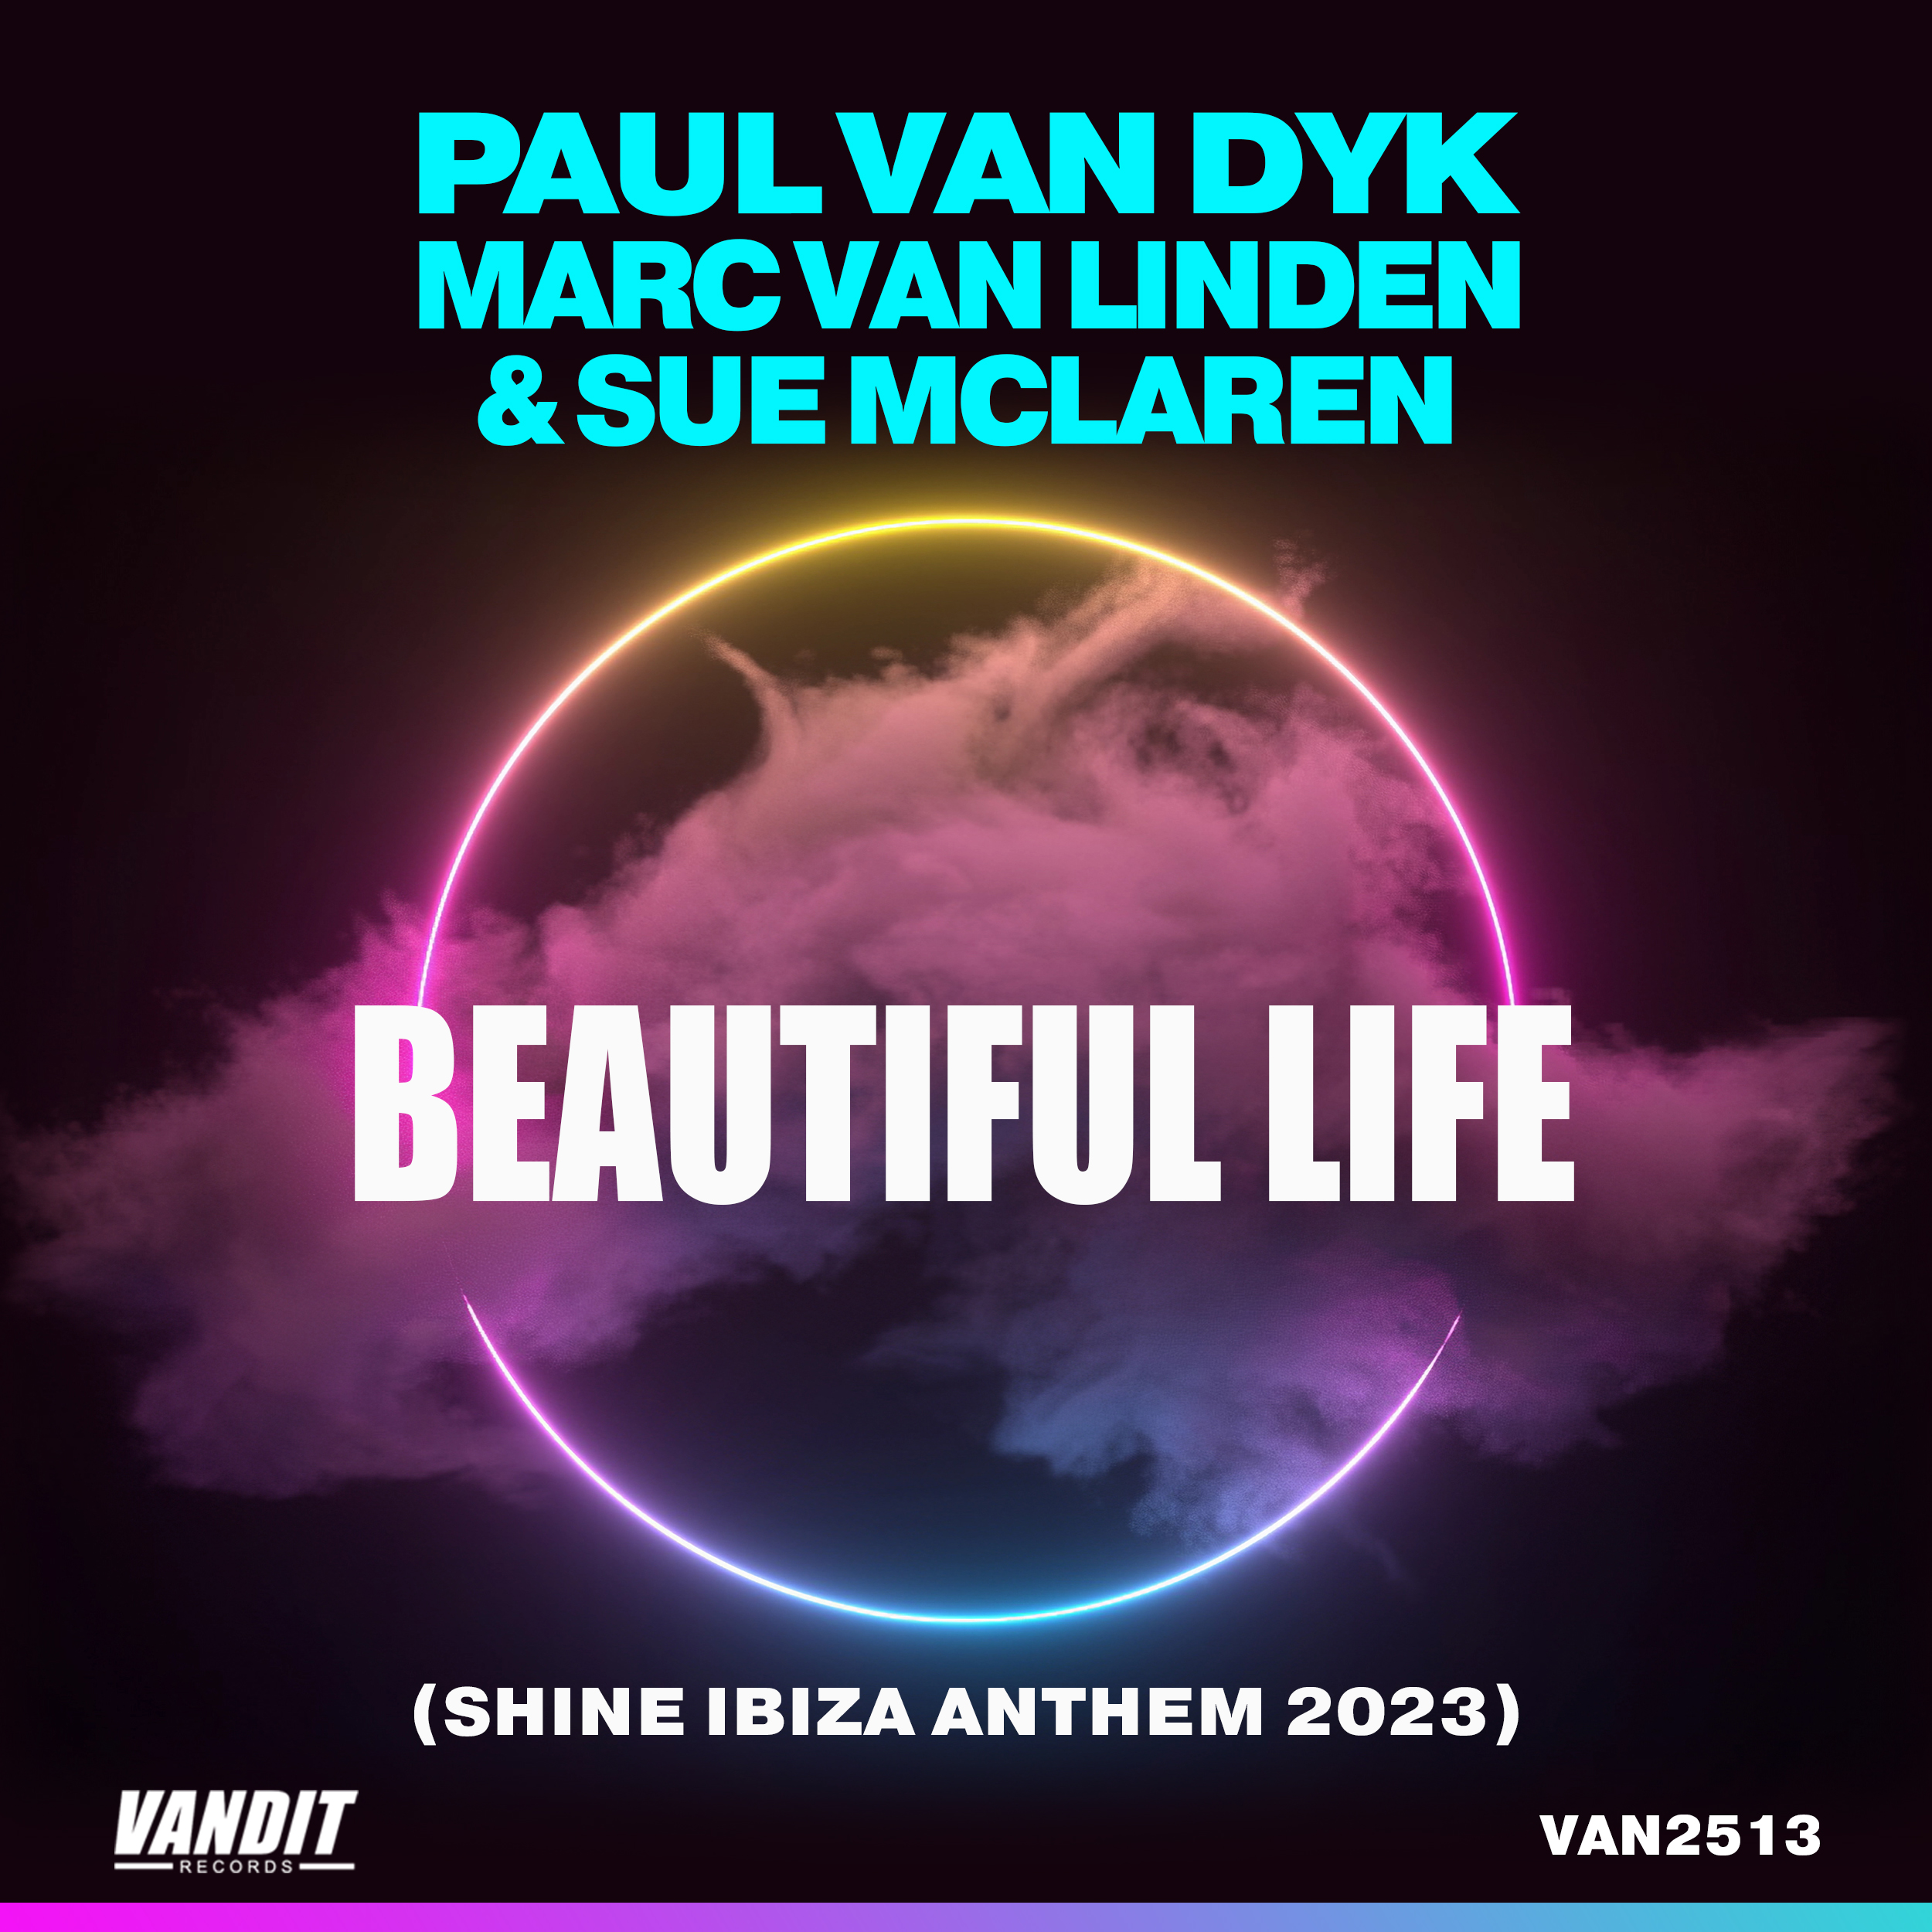 PAUL VAN DYK LINKS UP WITH MARC VAN LINDEN & SUE MCLAREN FOR THE SHINE IBIZA ANTHEM 2023 “BEAUTIFUL LIFE”! 